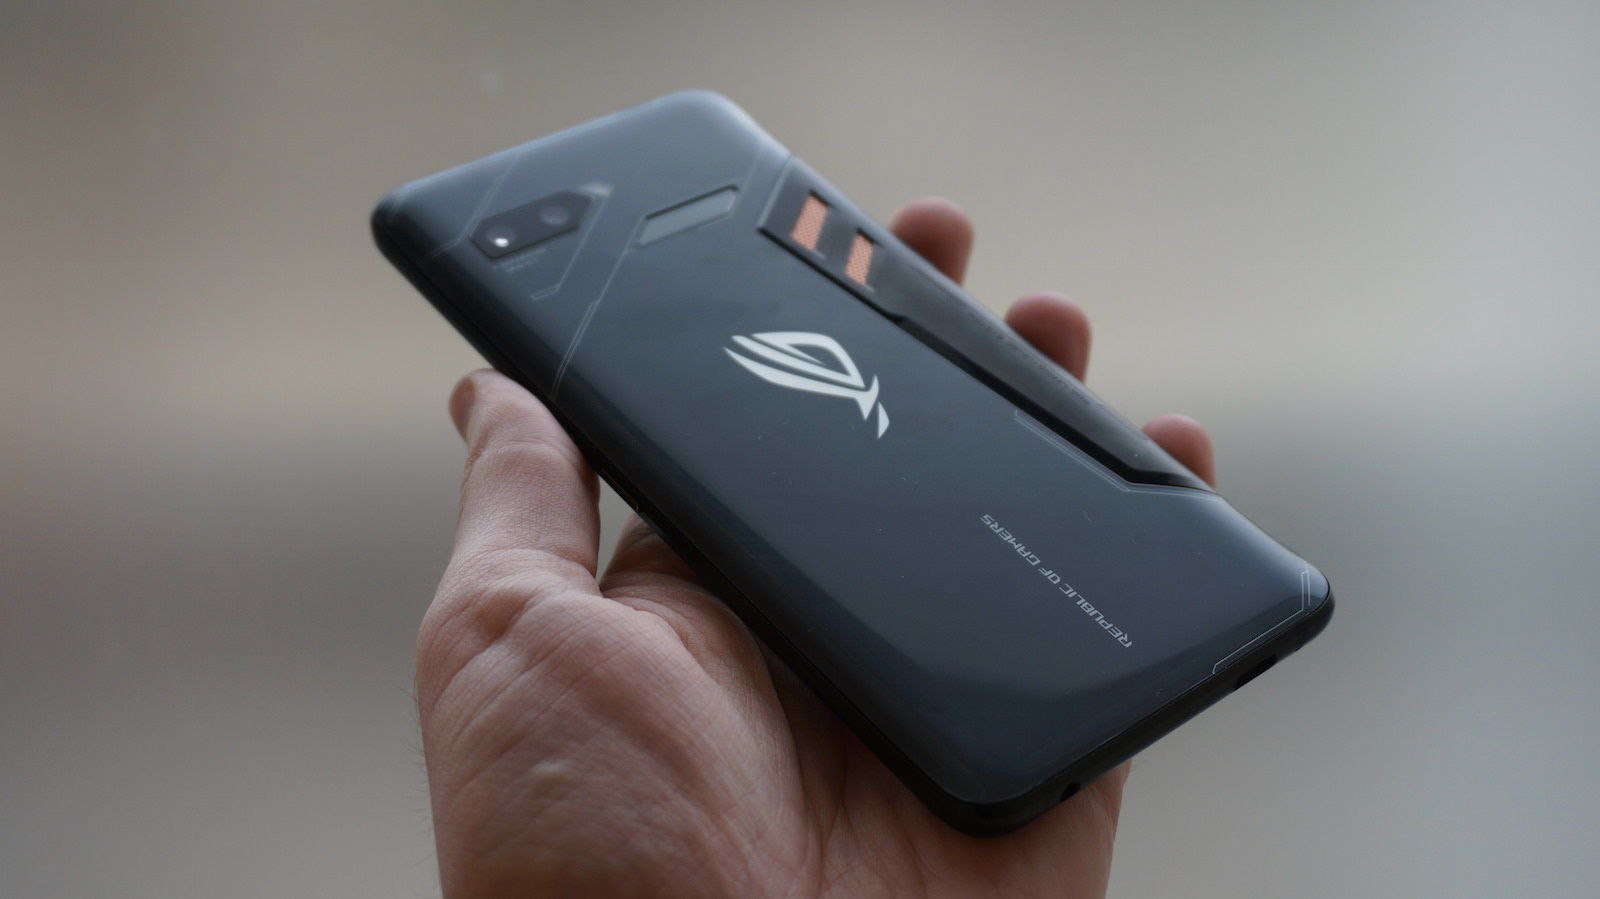 Asus ROG Phone: Is it the best gaming phone?